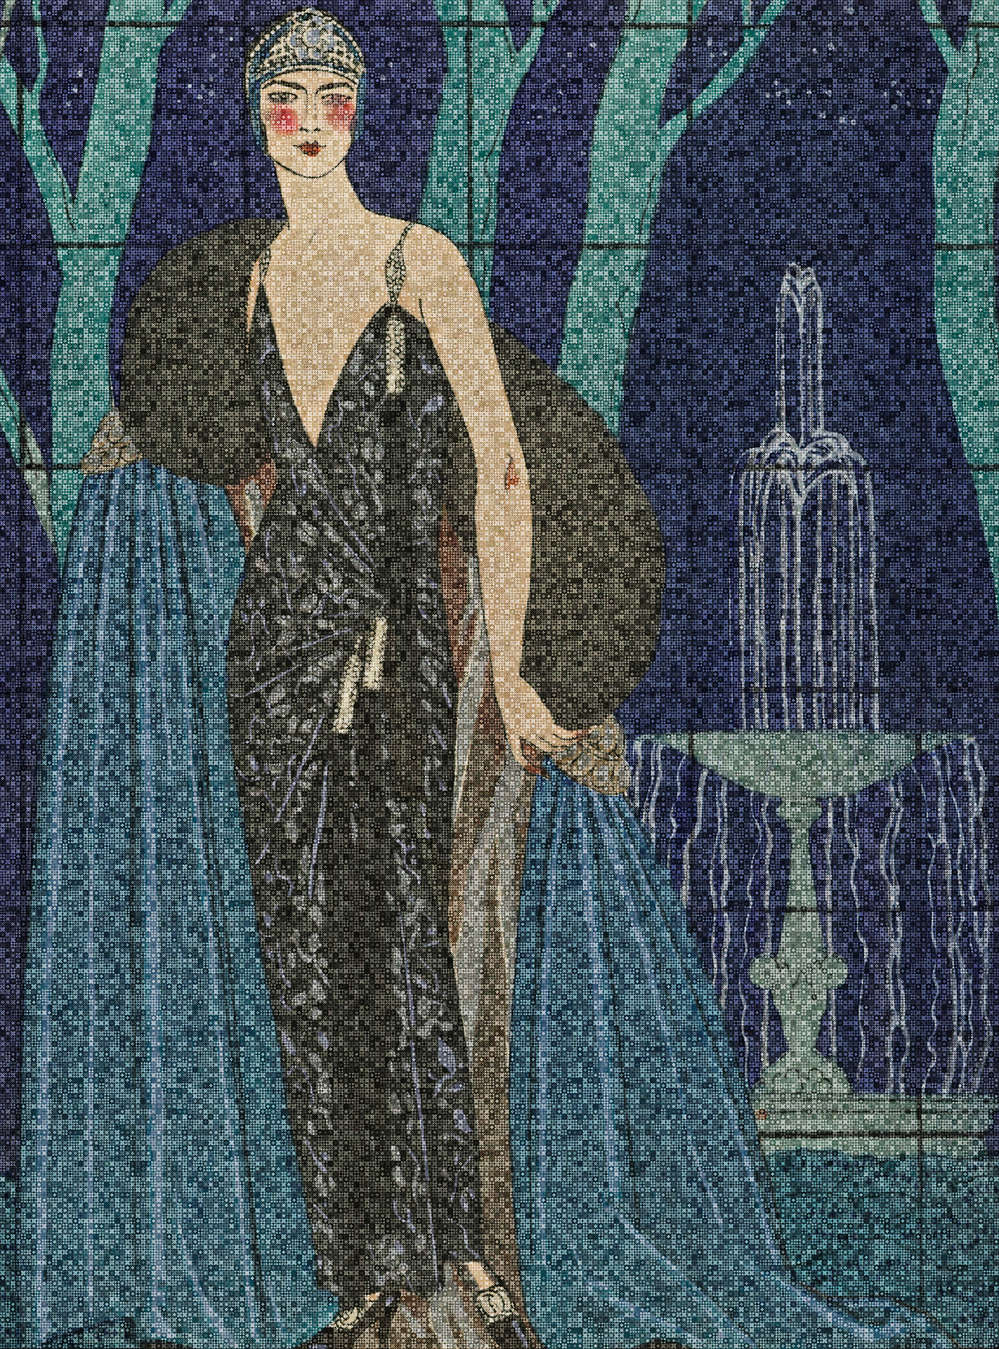             Scala 3 - Papel Pintado Art Deco motivo mujer elegante
        